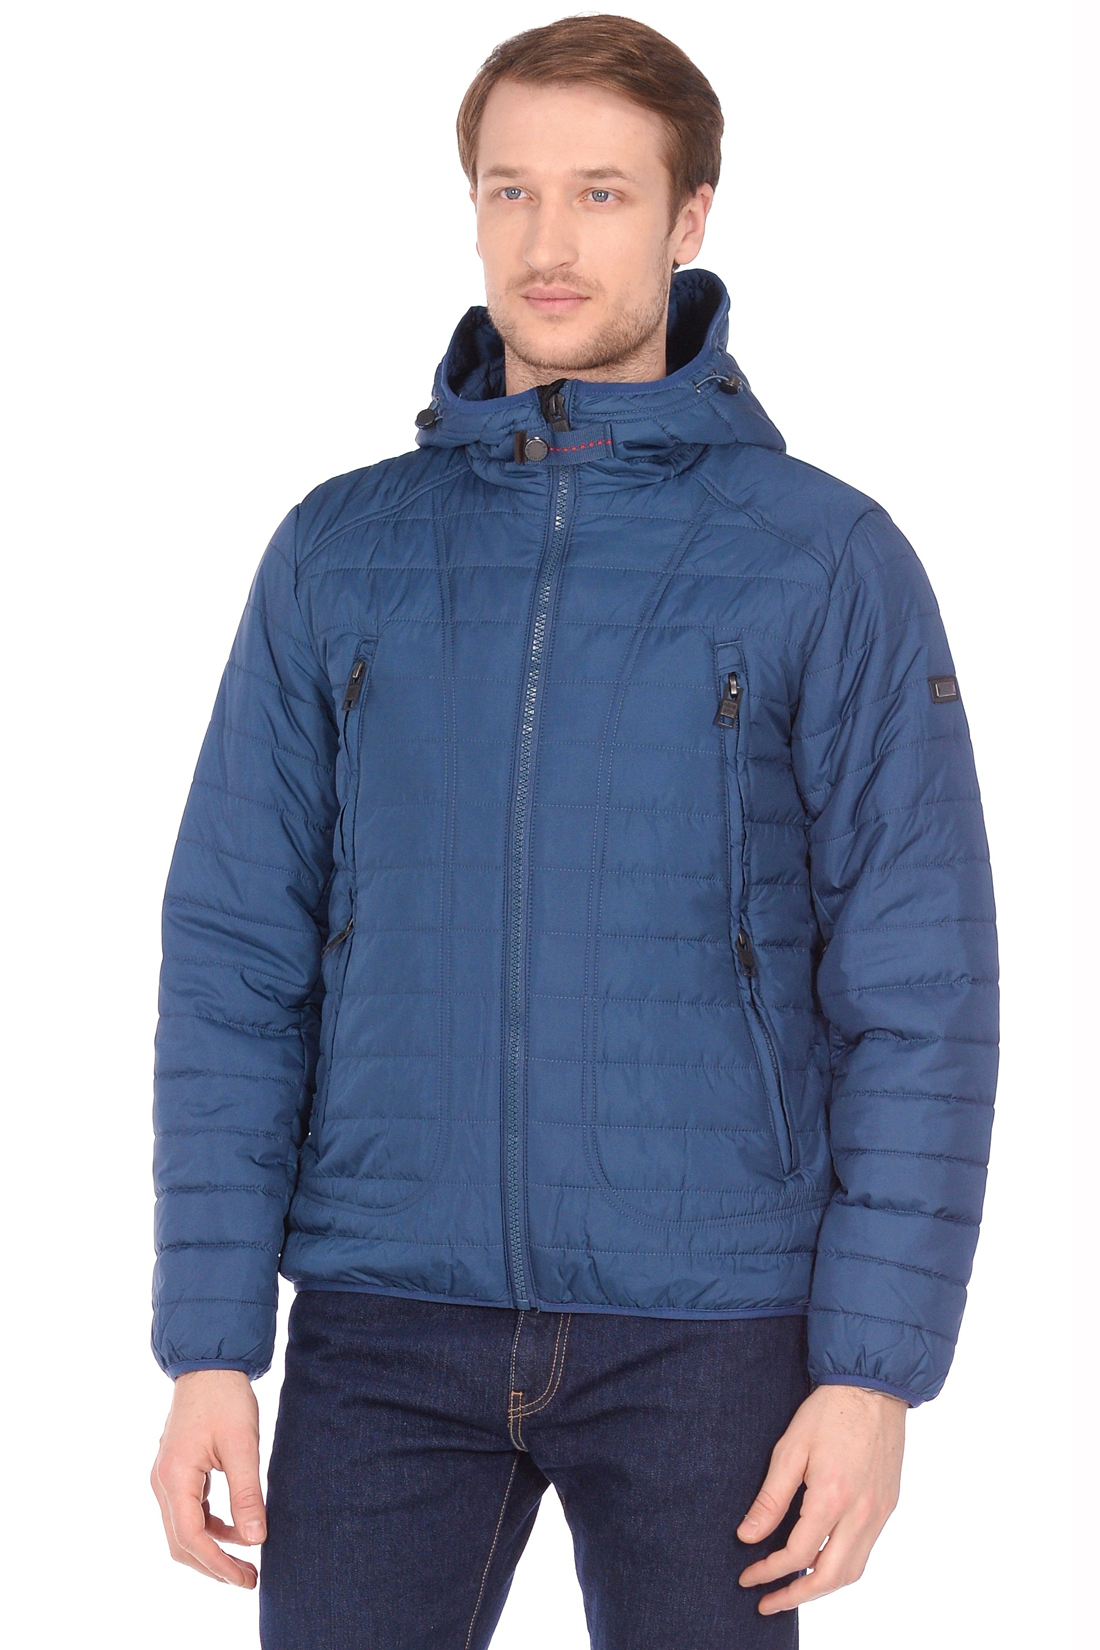 Куртка с двумя линиями карманов (арт. baon B539007), размер 3XL, цвет синий Куртка с двумя линиями карманов (арт. baon B539007) - фото 6